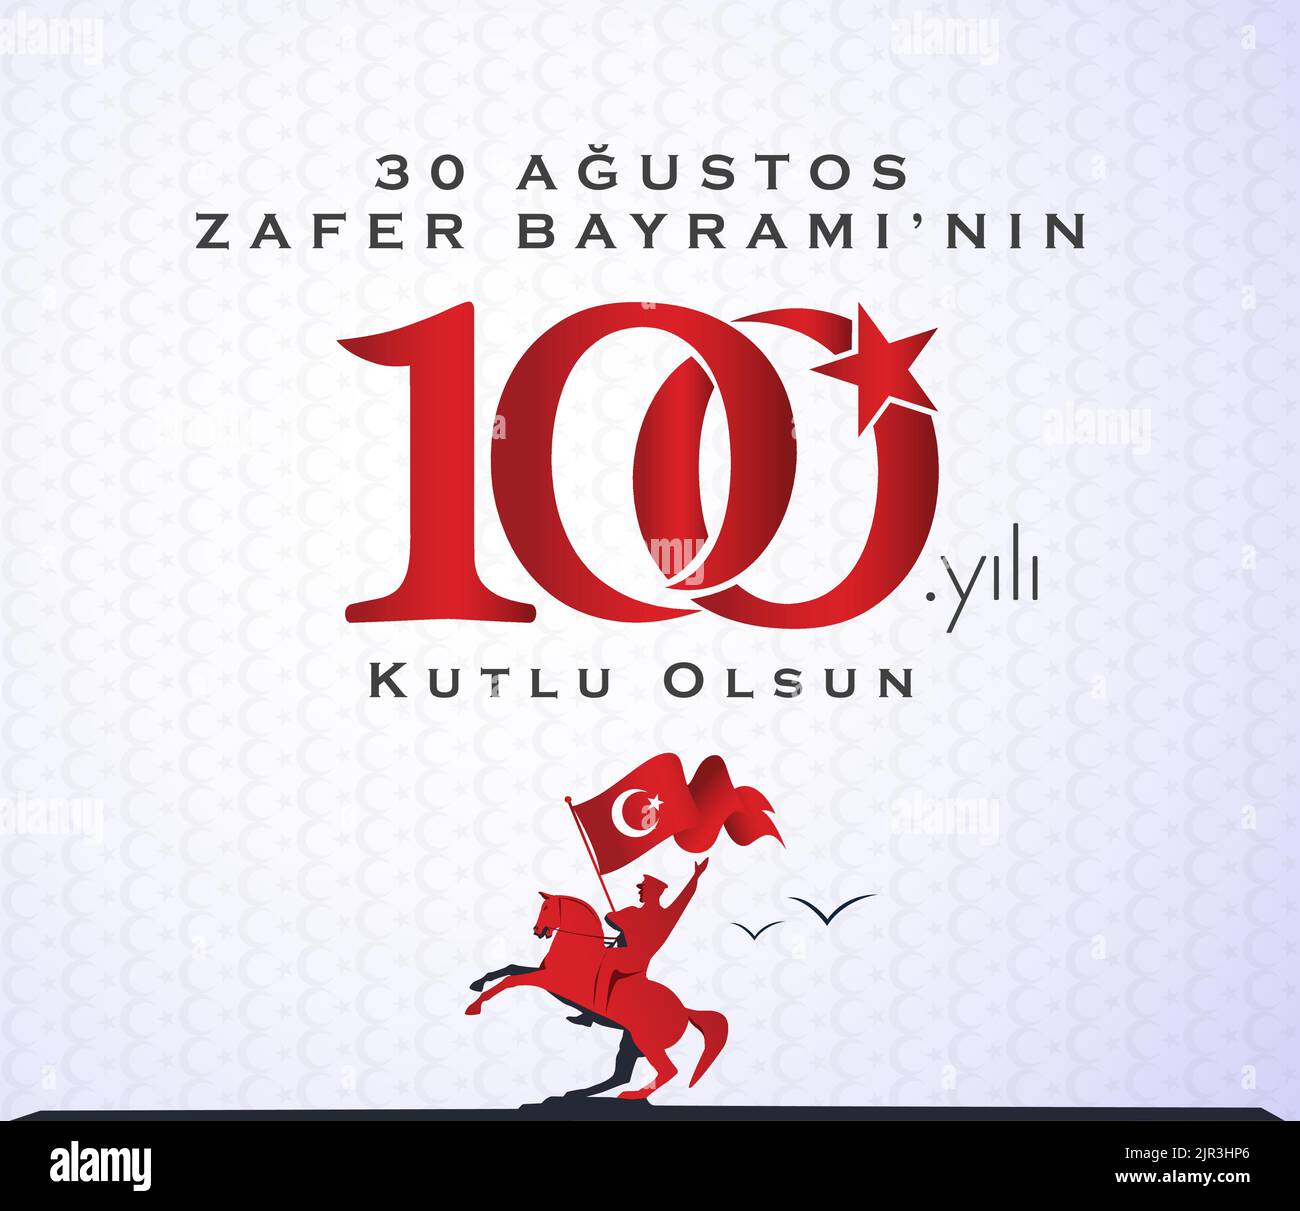 30 Ağustos Zafer Bayramı 100 yıl Kutlu Olsun. Translation: August 30 celebration of victory and the National Day in Turkey. 100 years. Logo. Stock Vector